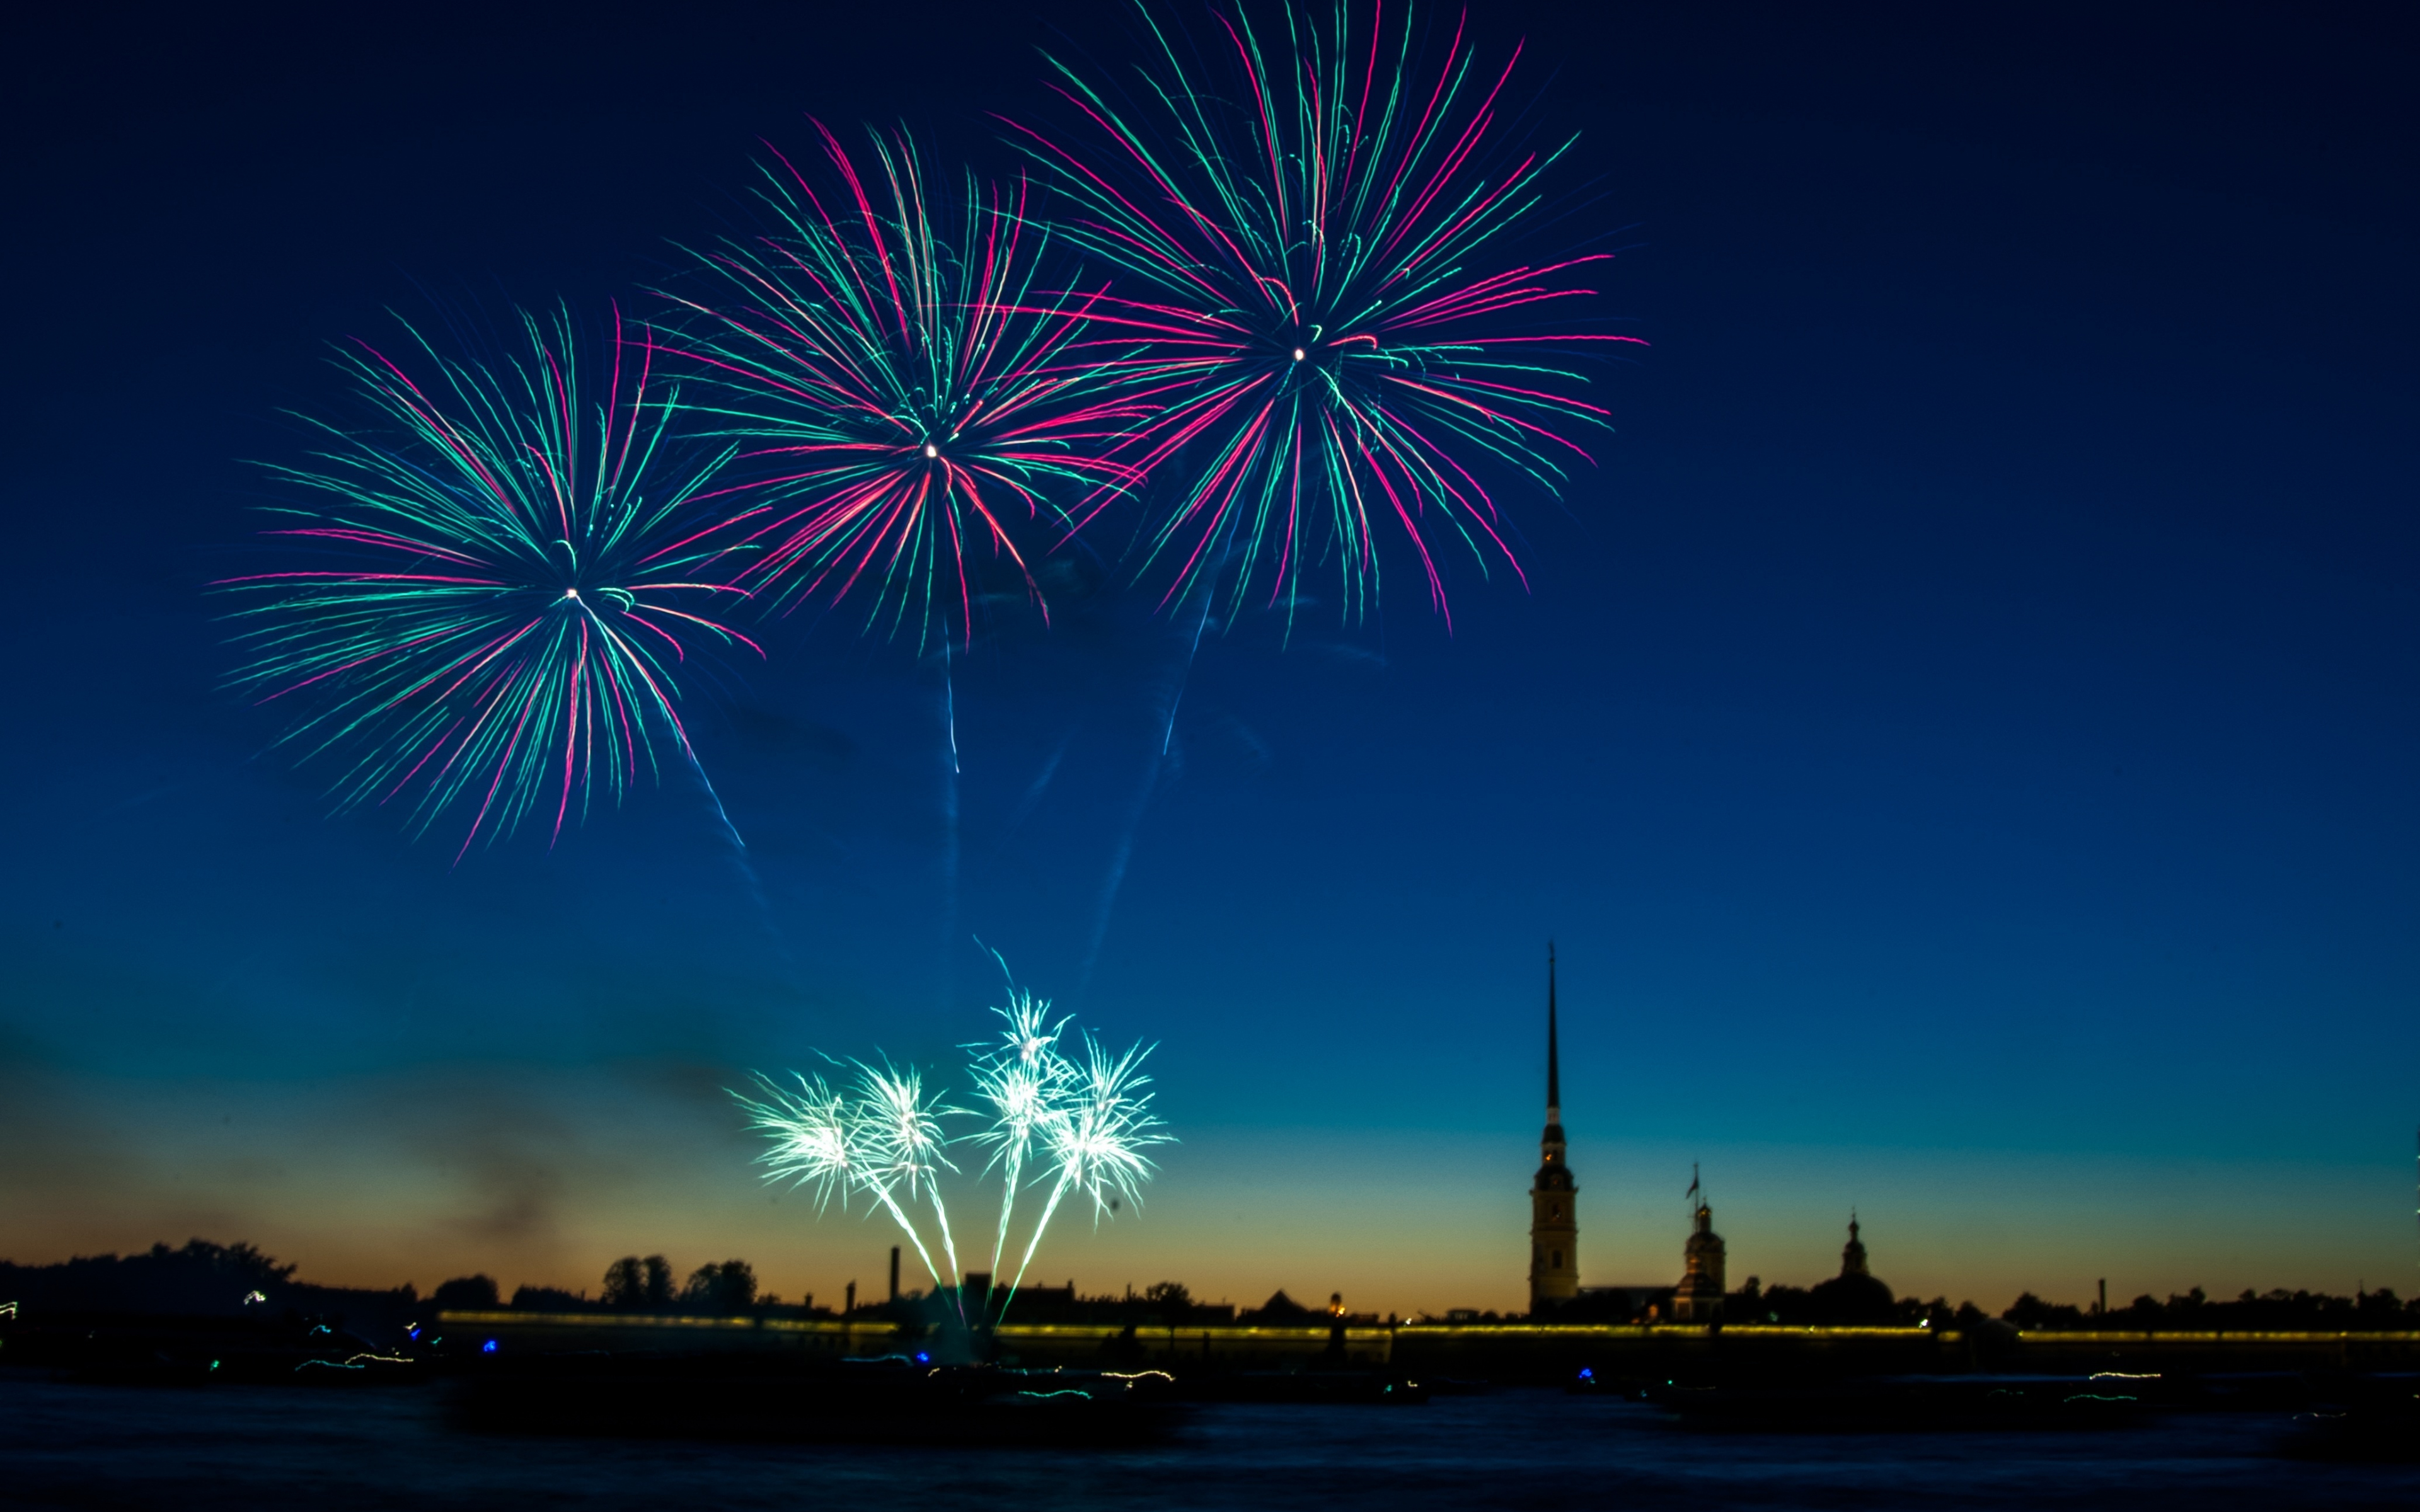 Download 3840x2400 Wallpaper Celebrations Fireworks Sky Night 4k